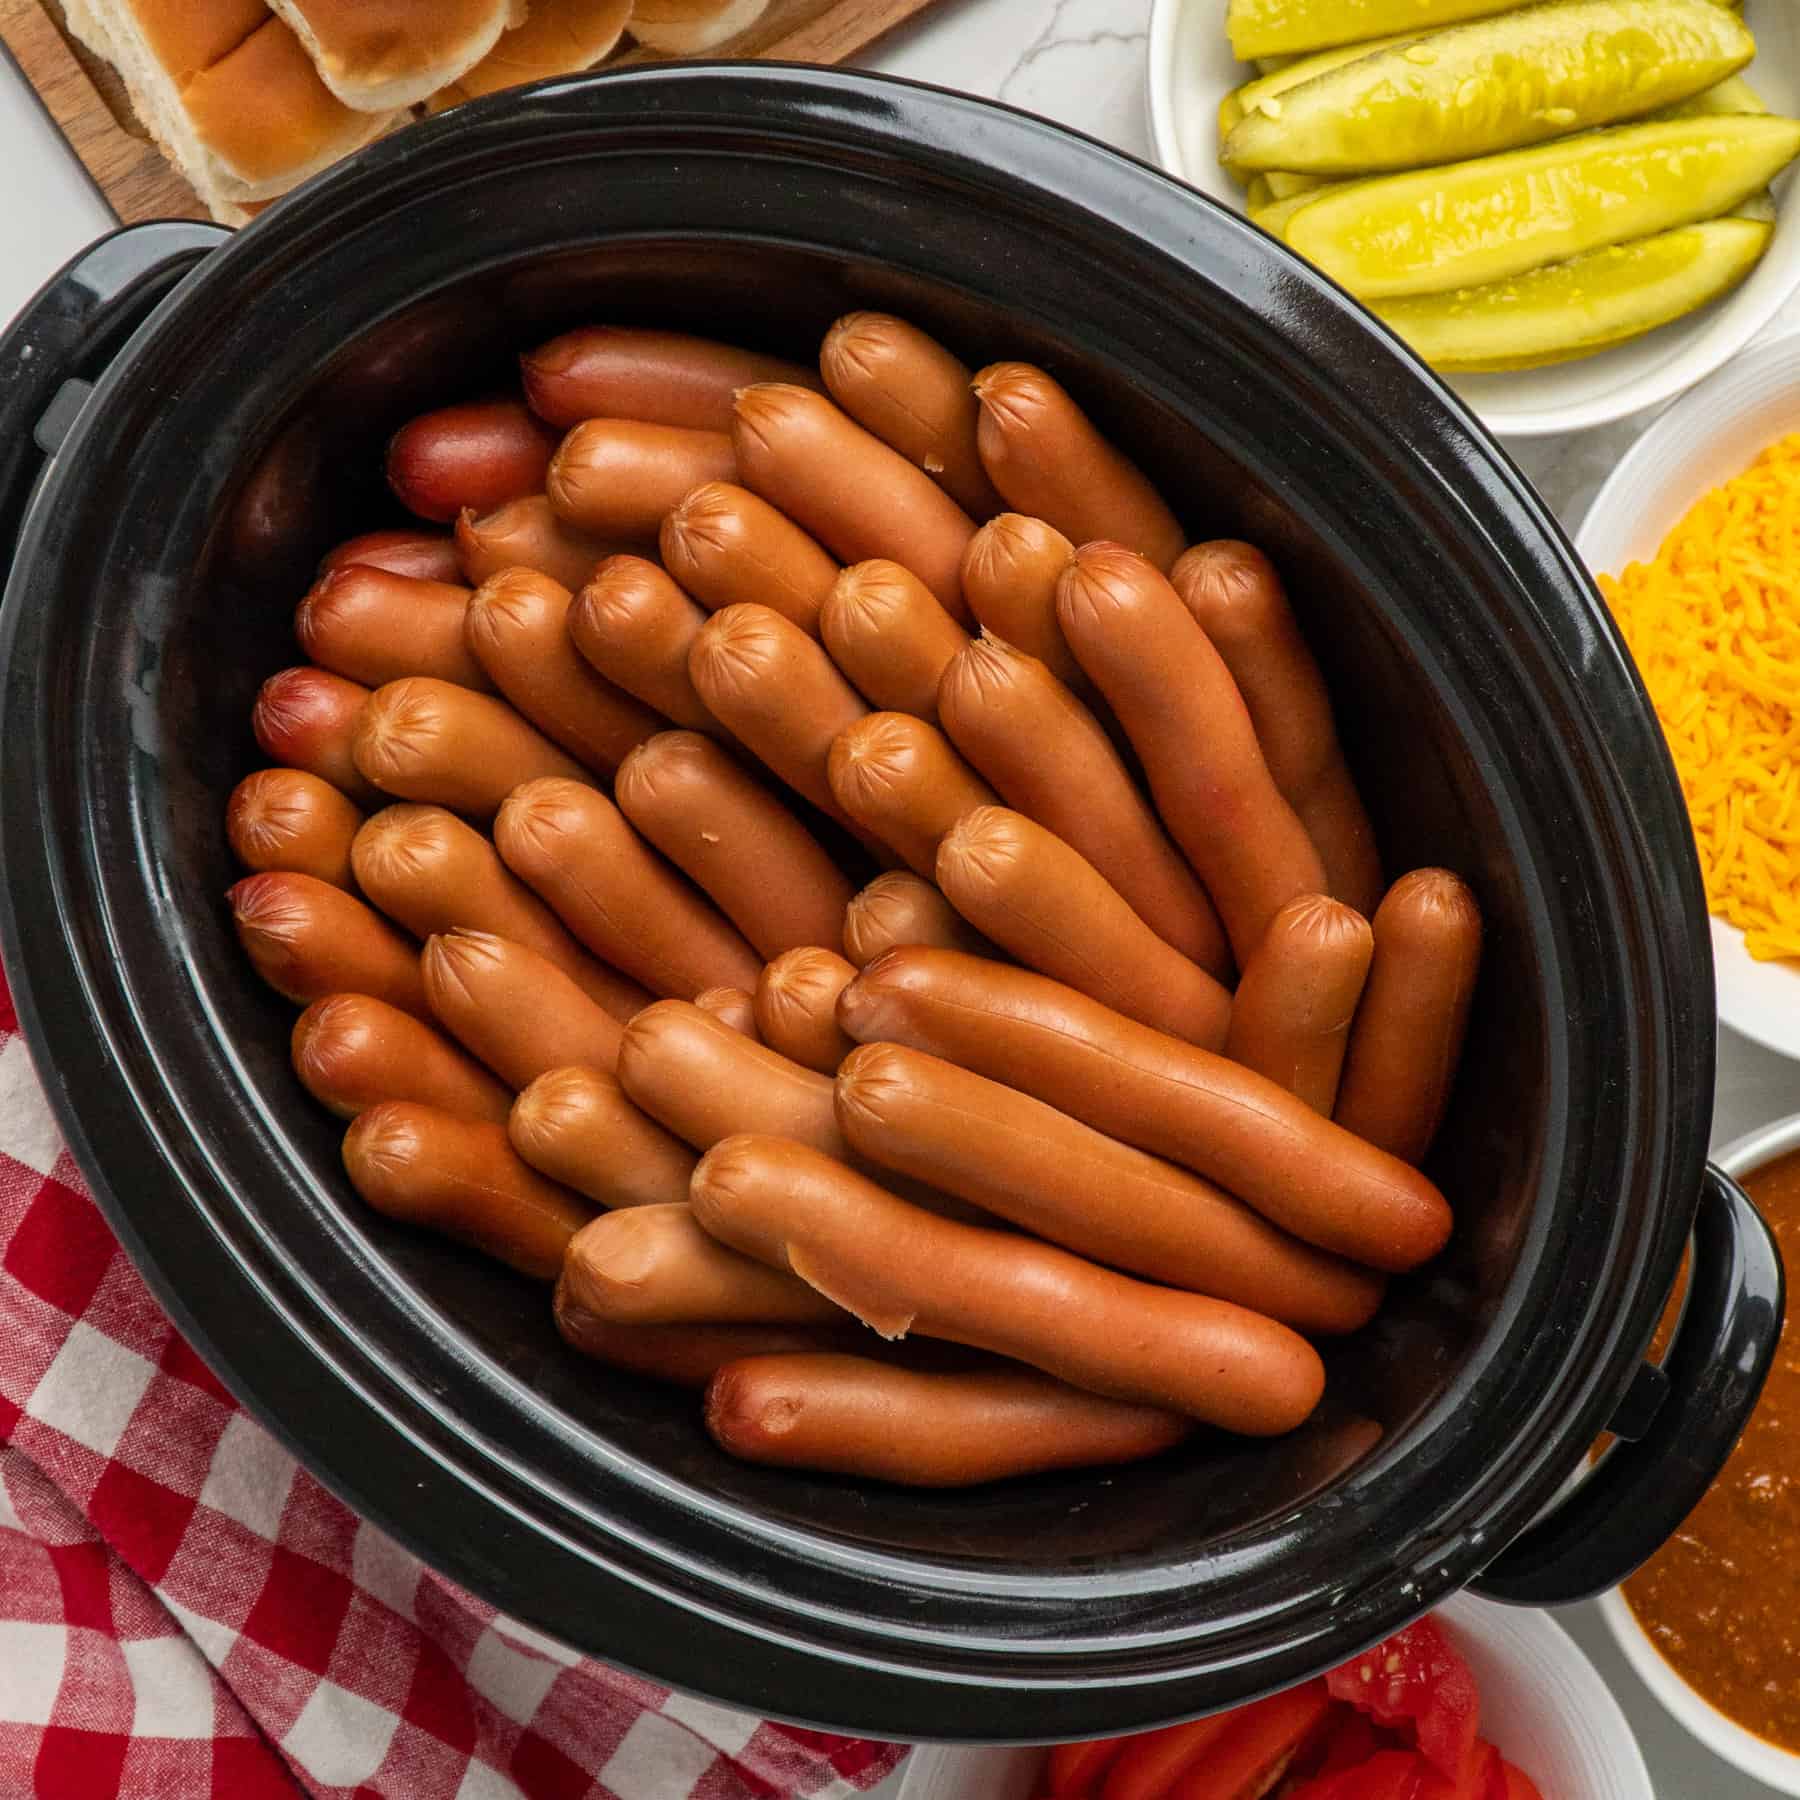 Hot dogs in a crock pot.